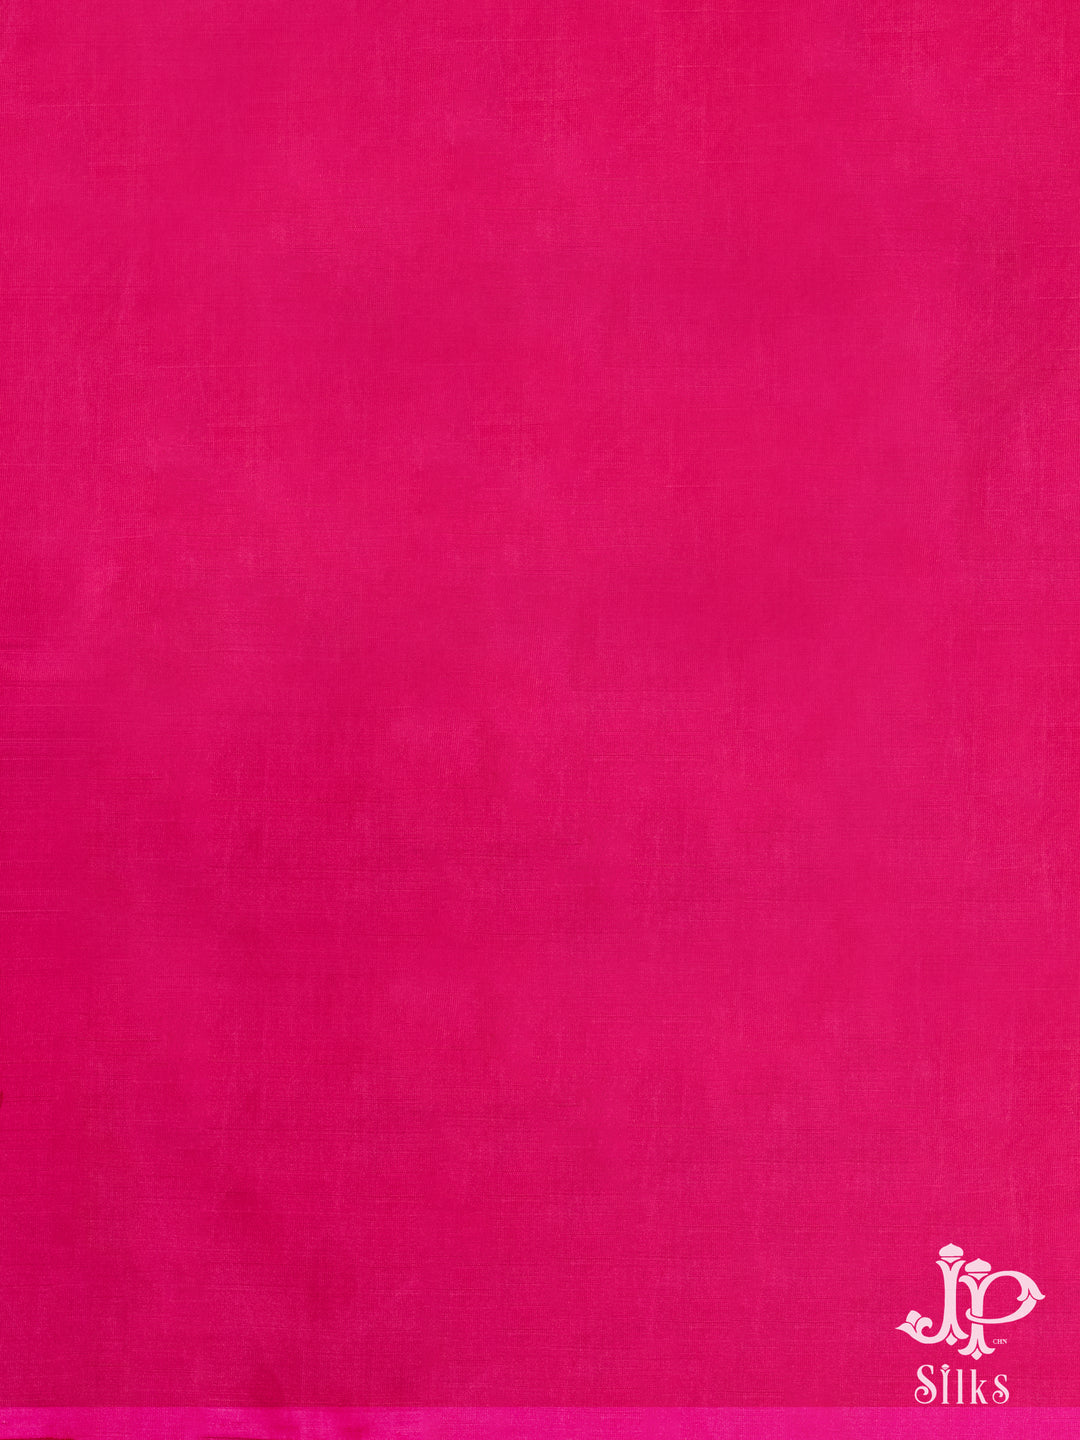 Teal Green and Pink Soft Silk Saree - D1824 - View 2